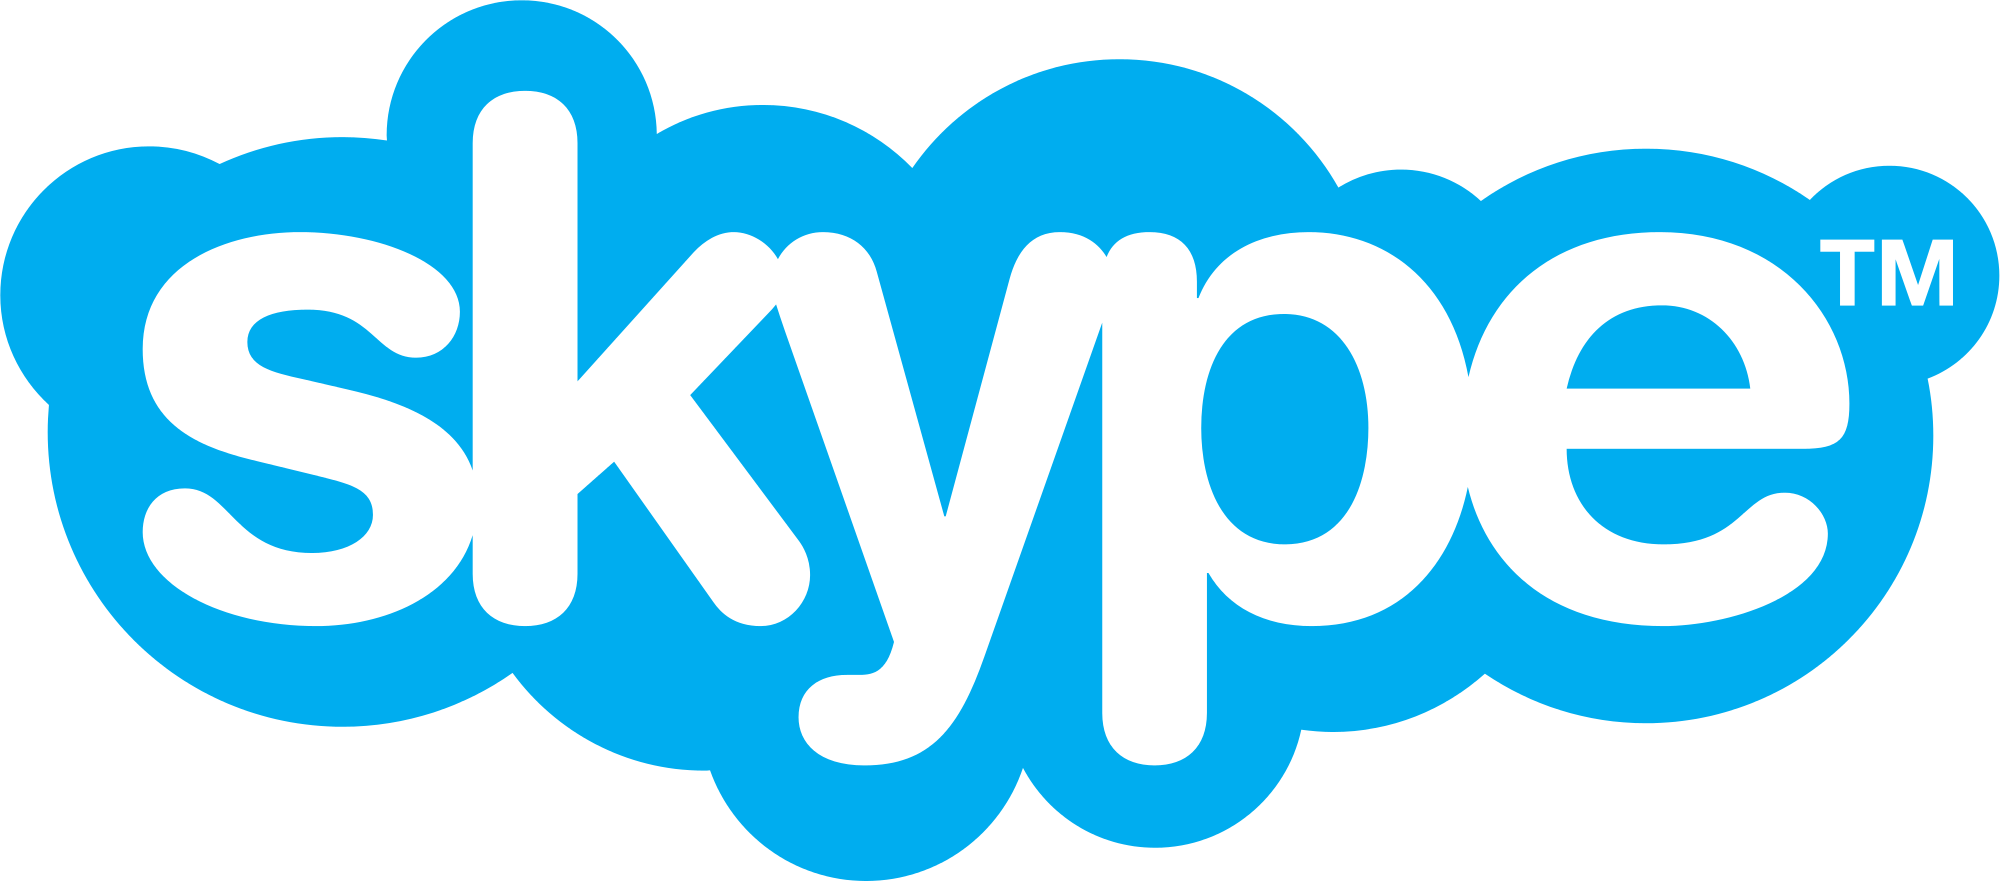 2000px-Skype_logo.svg